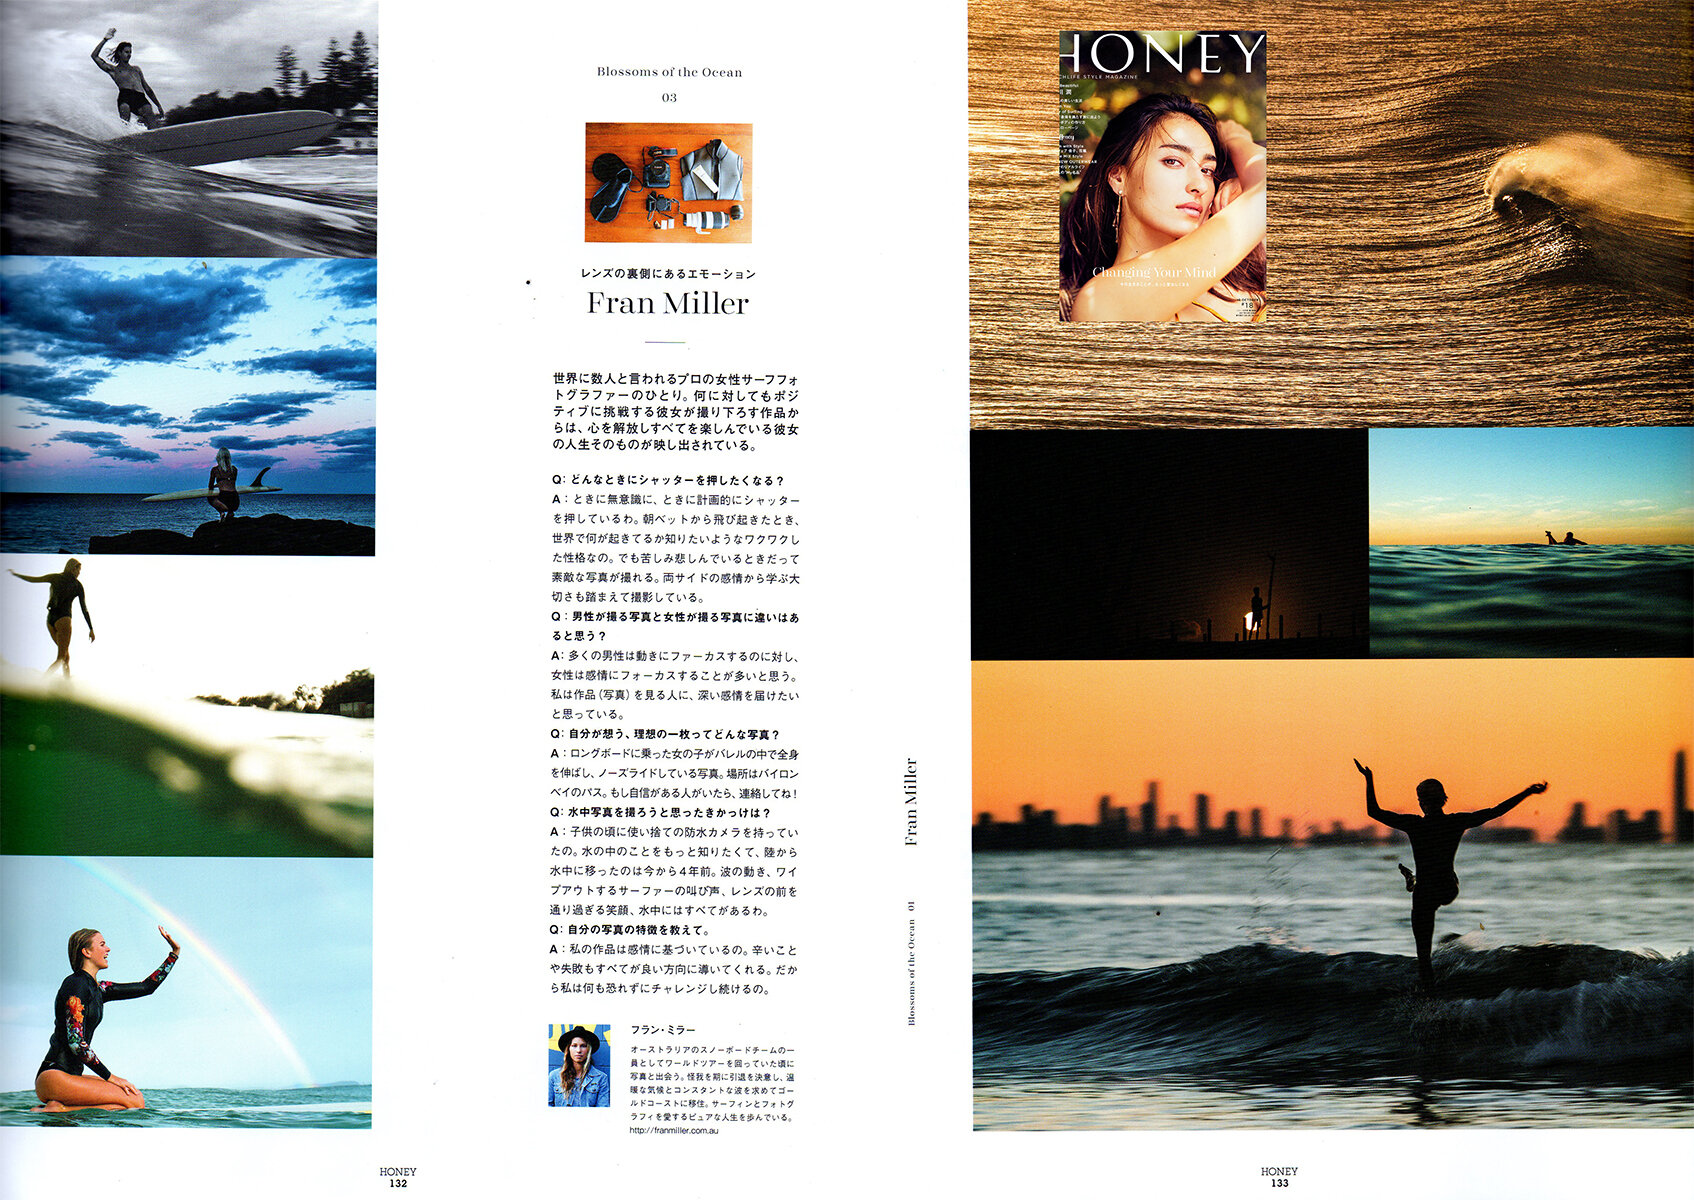 Honey_Magazine_Japan_Interview_Fran_Miller.jpg